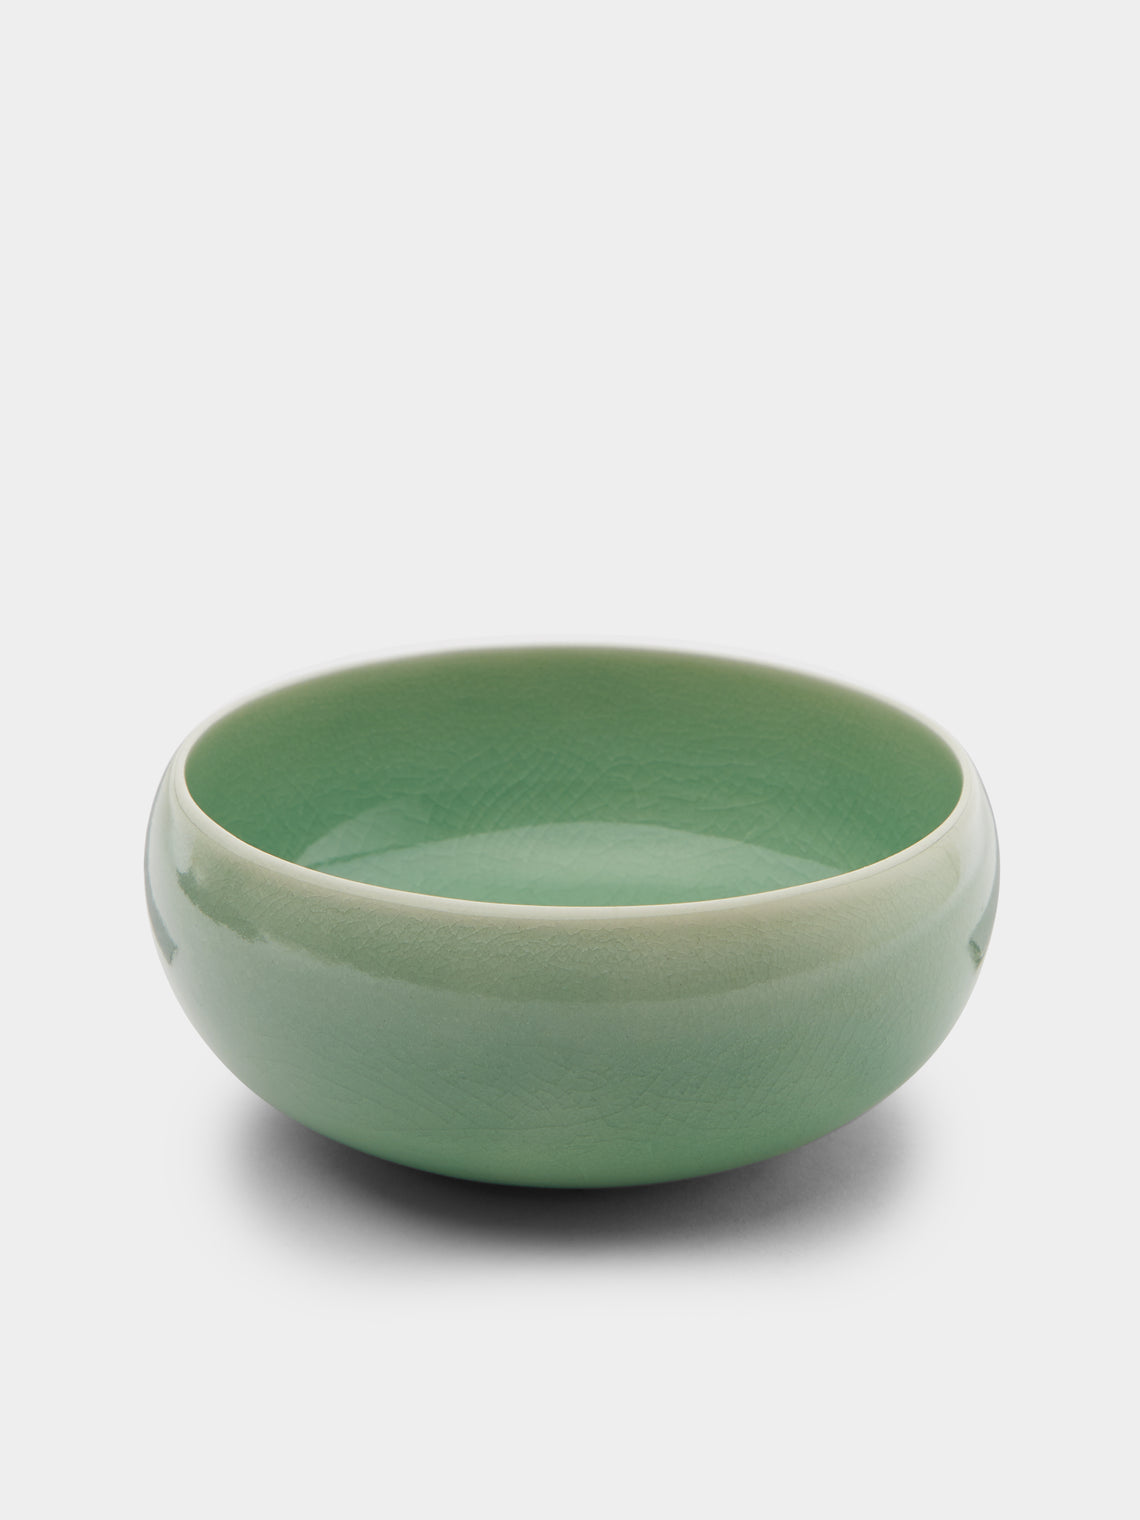 Jinho Choi - Celadon Bowls (Set of 4) -  - ABASK - 